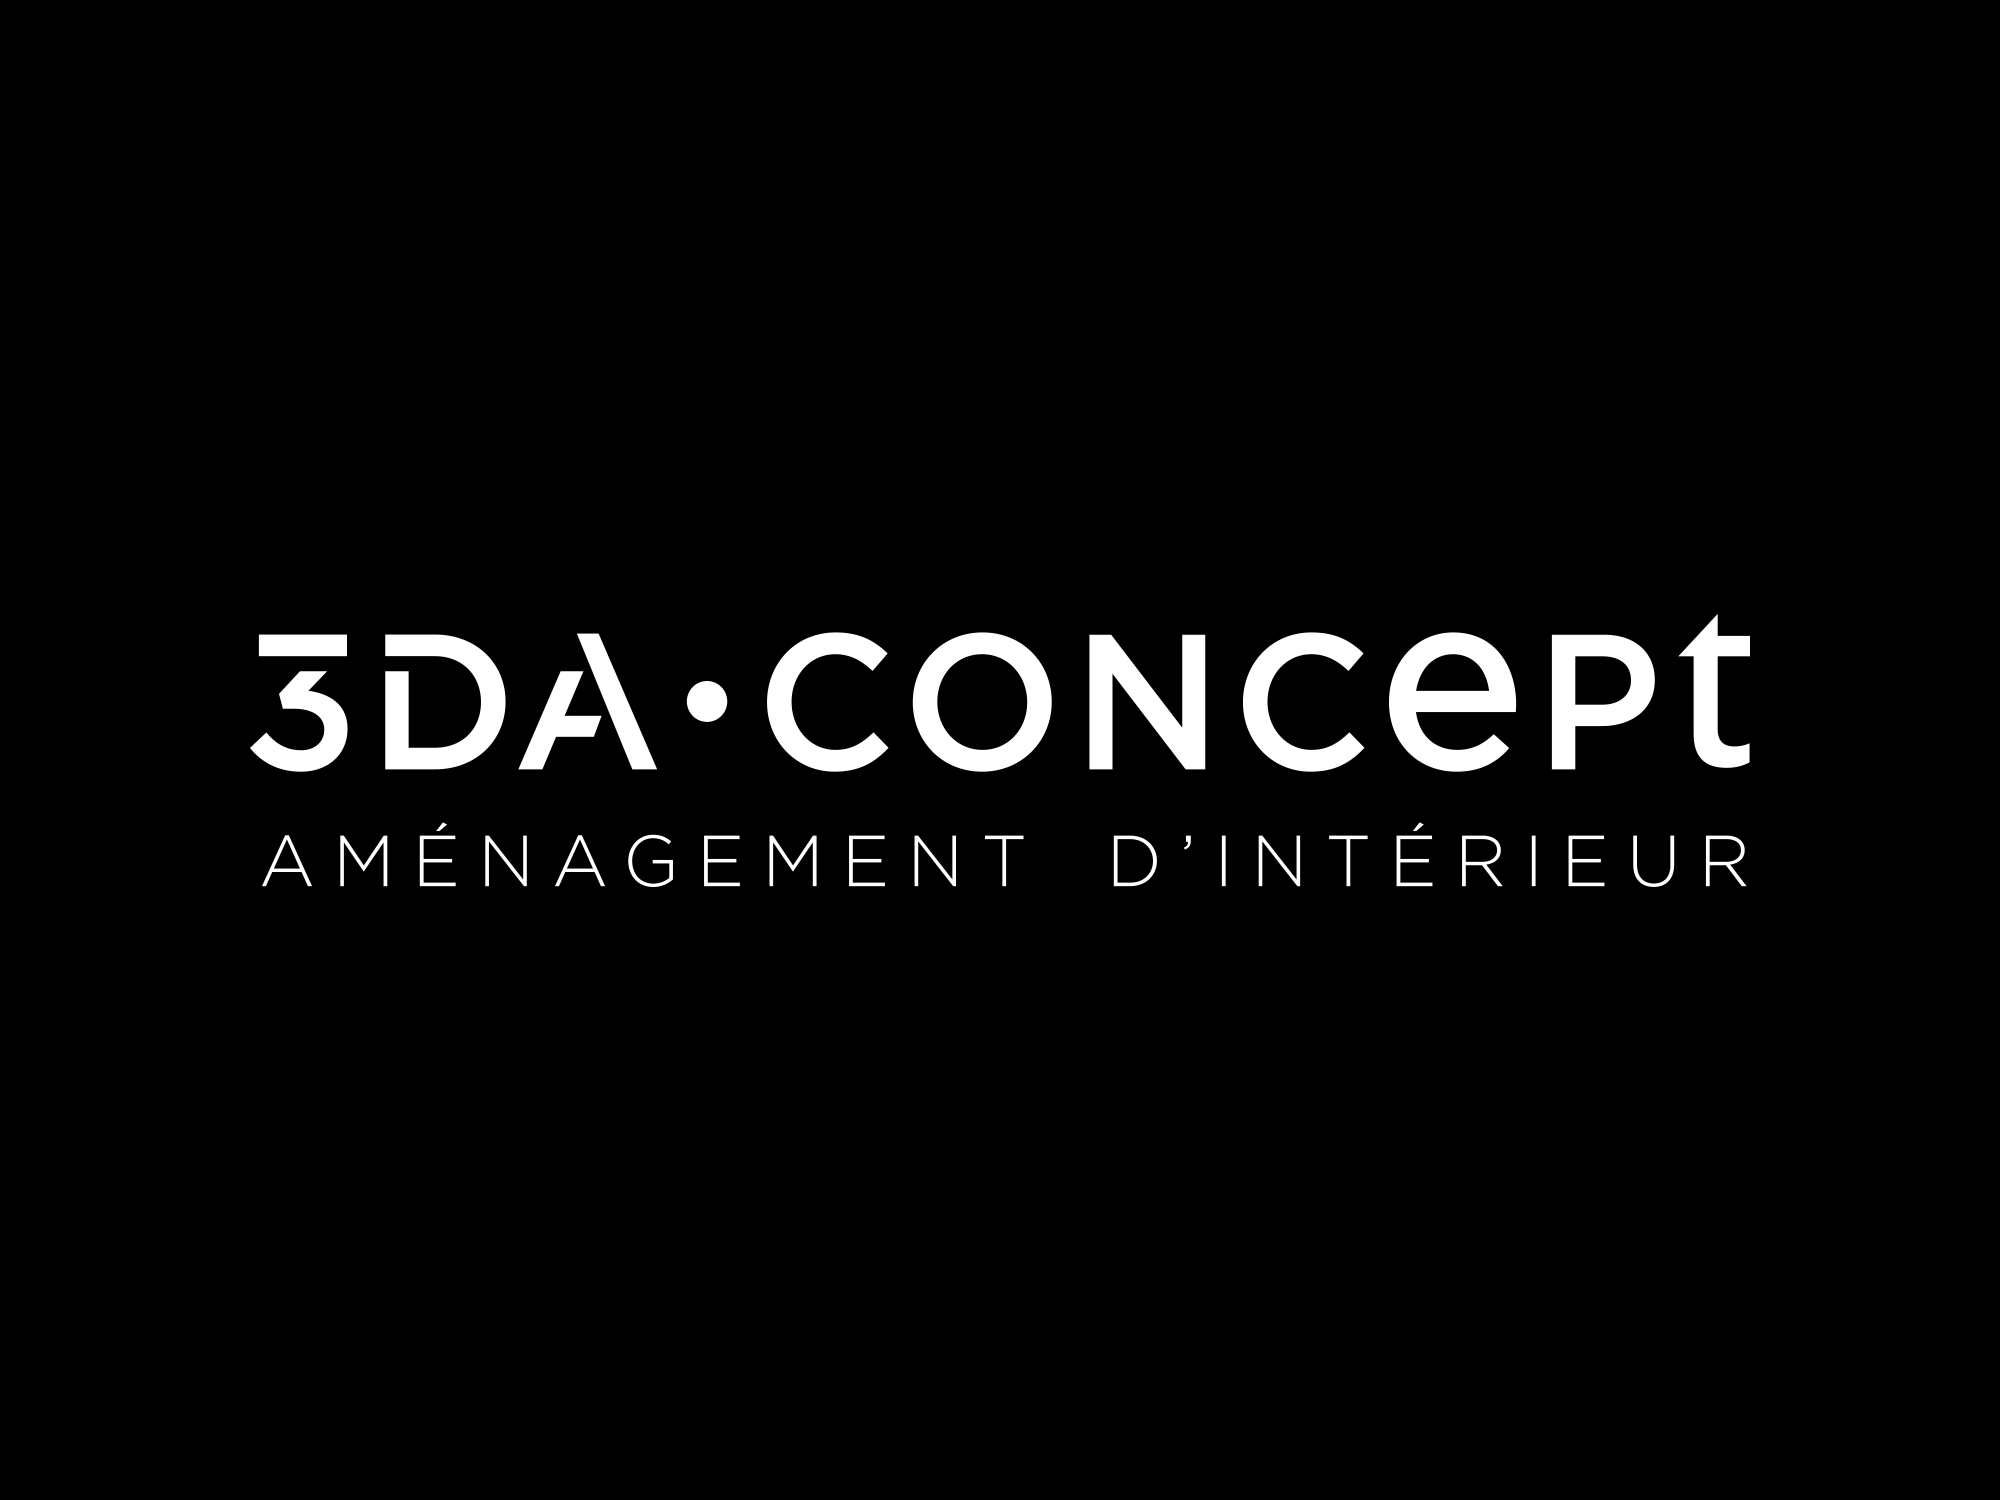 3DA Concept